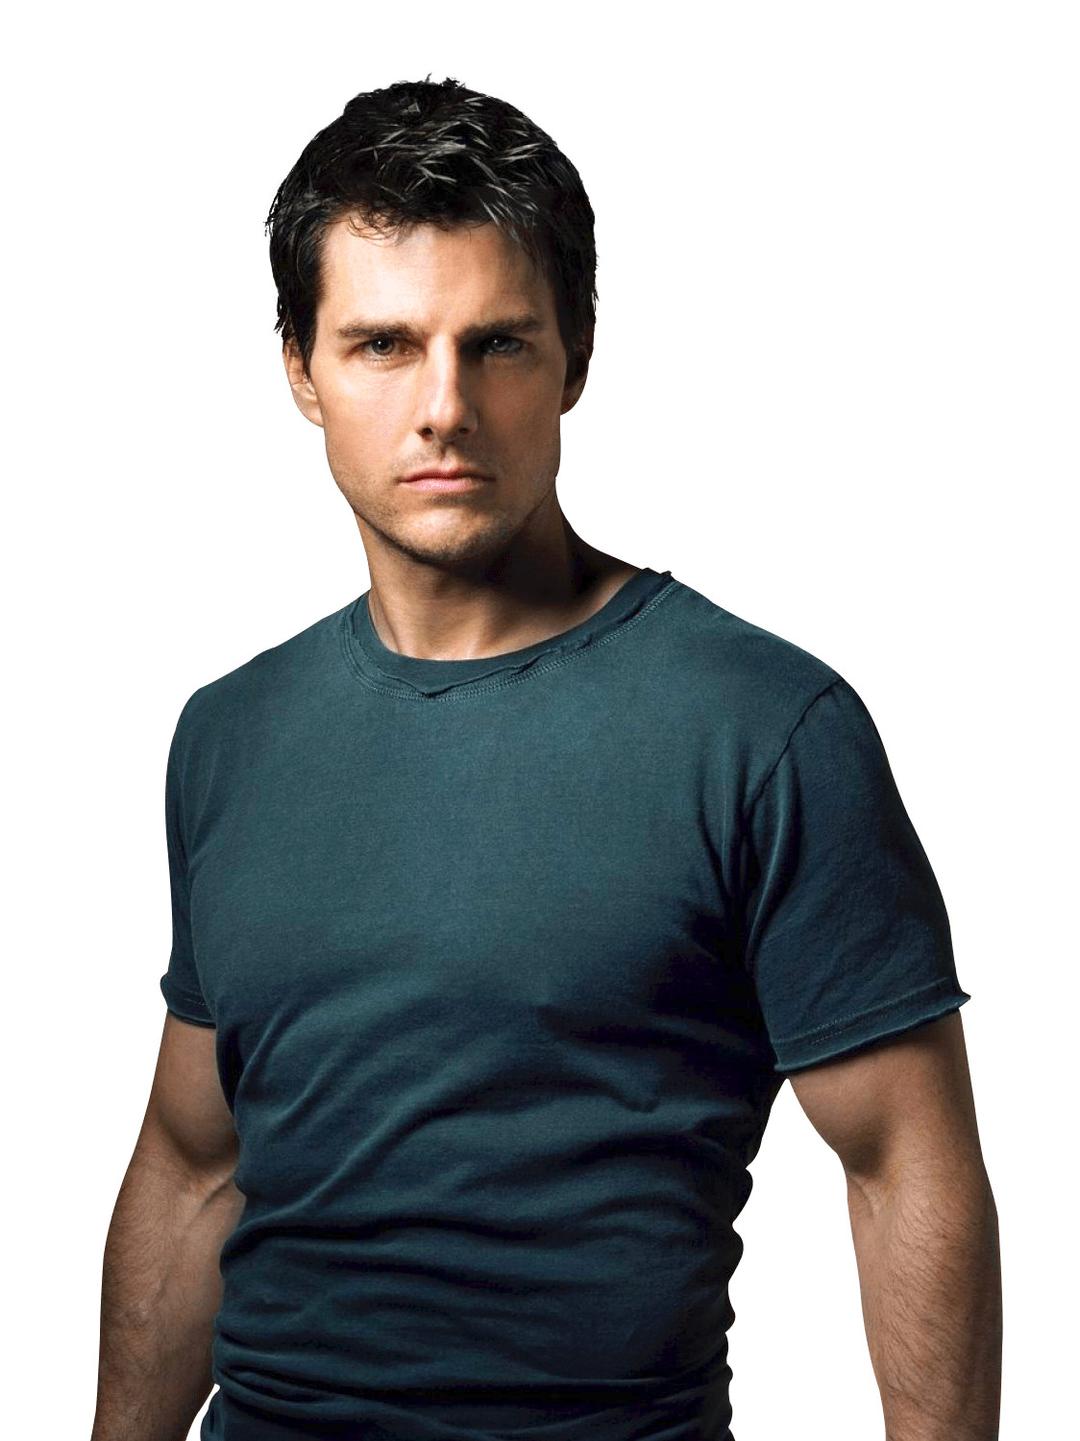 Tom Cruise Tshirt png transparent